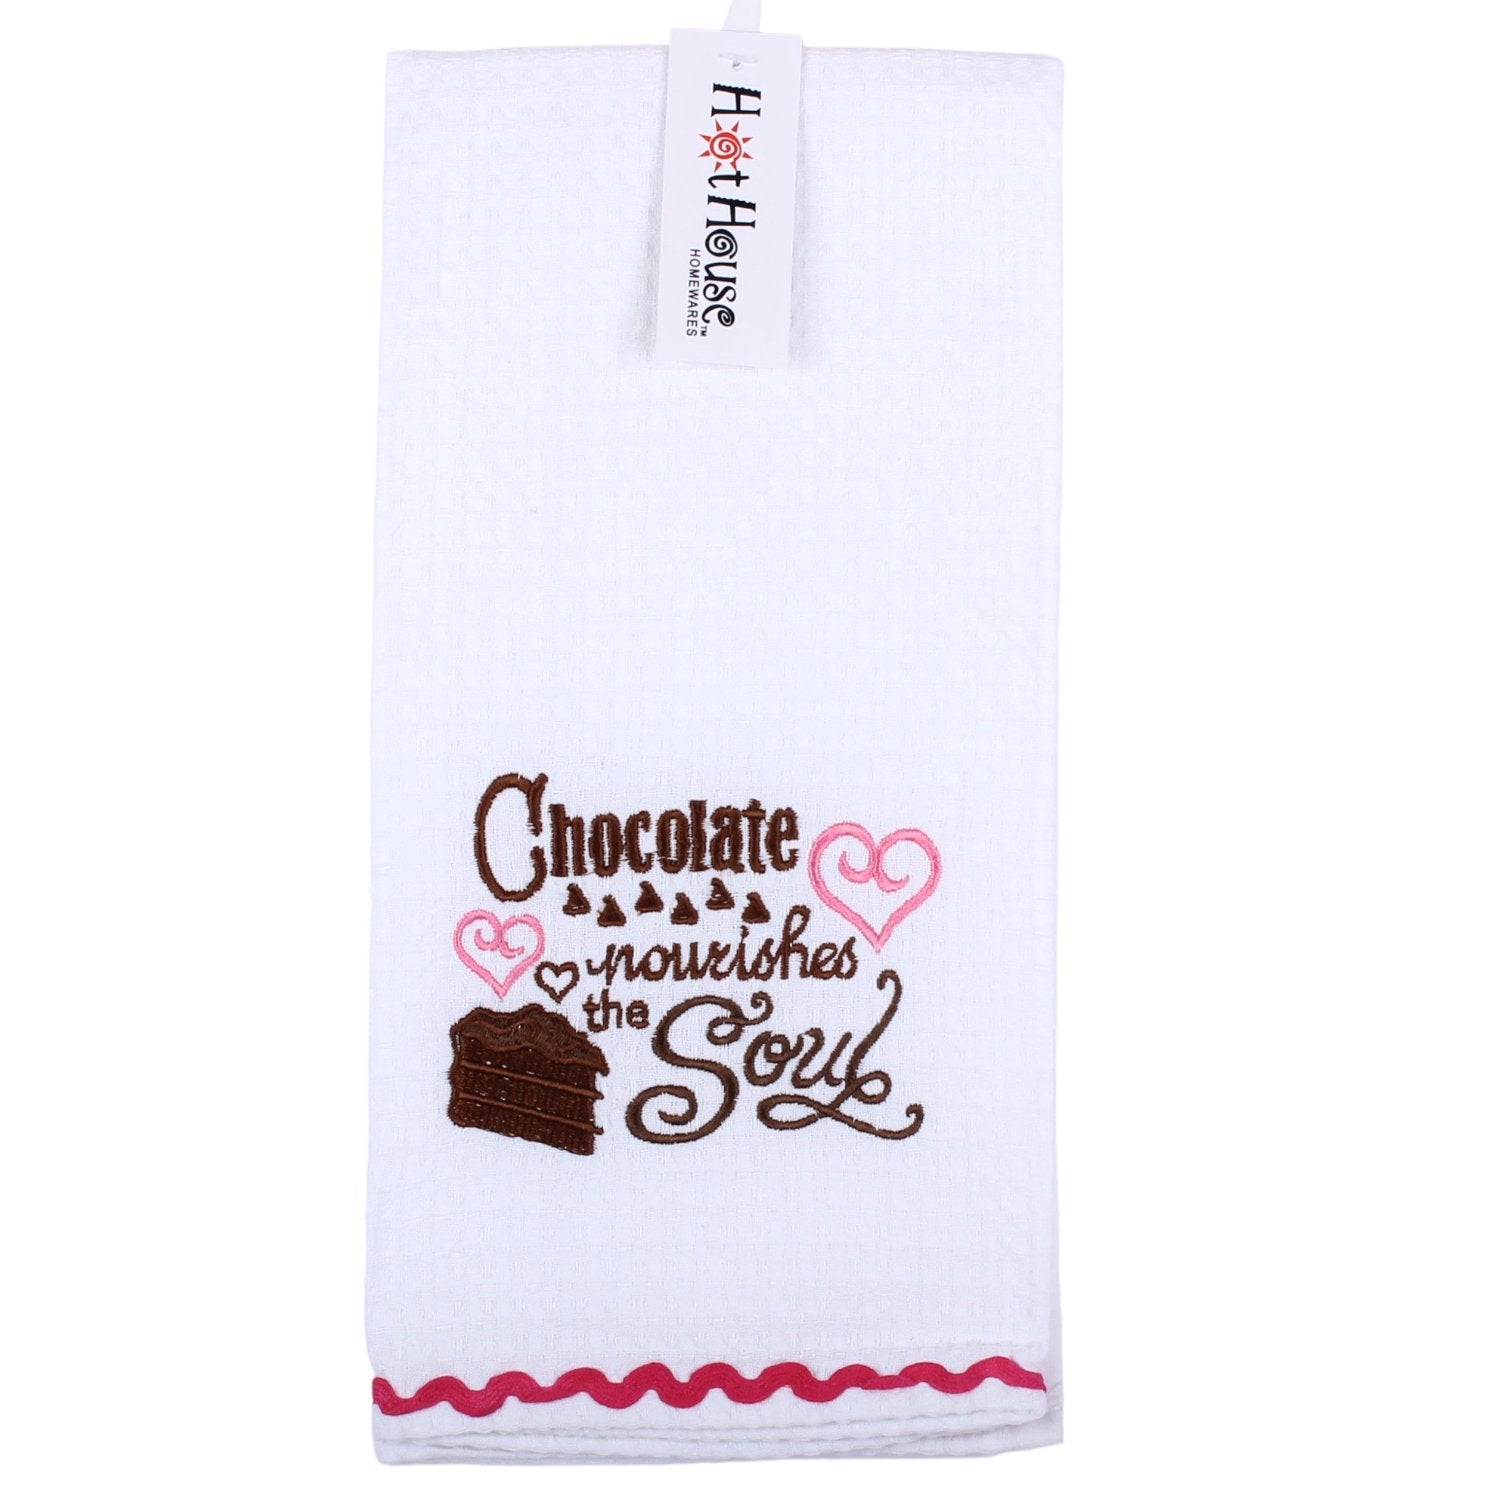 Chocolate nourishes the soul tea towel - Beautiful Gifts